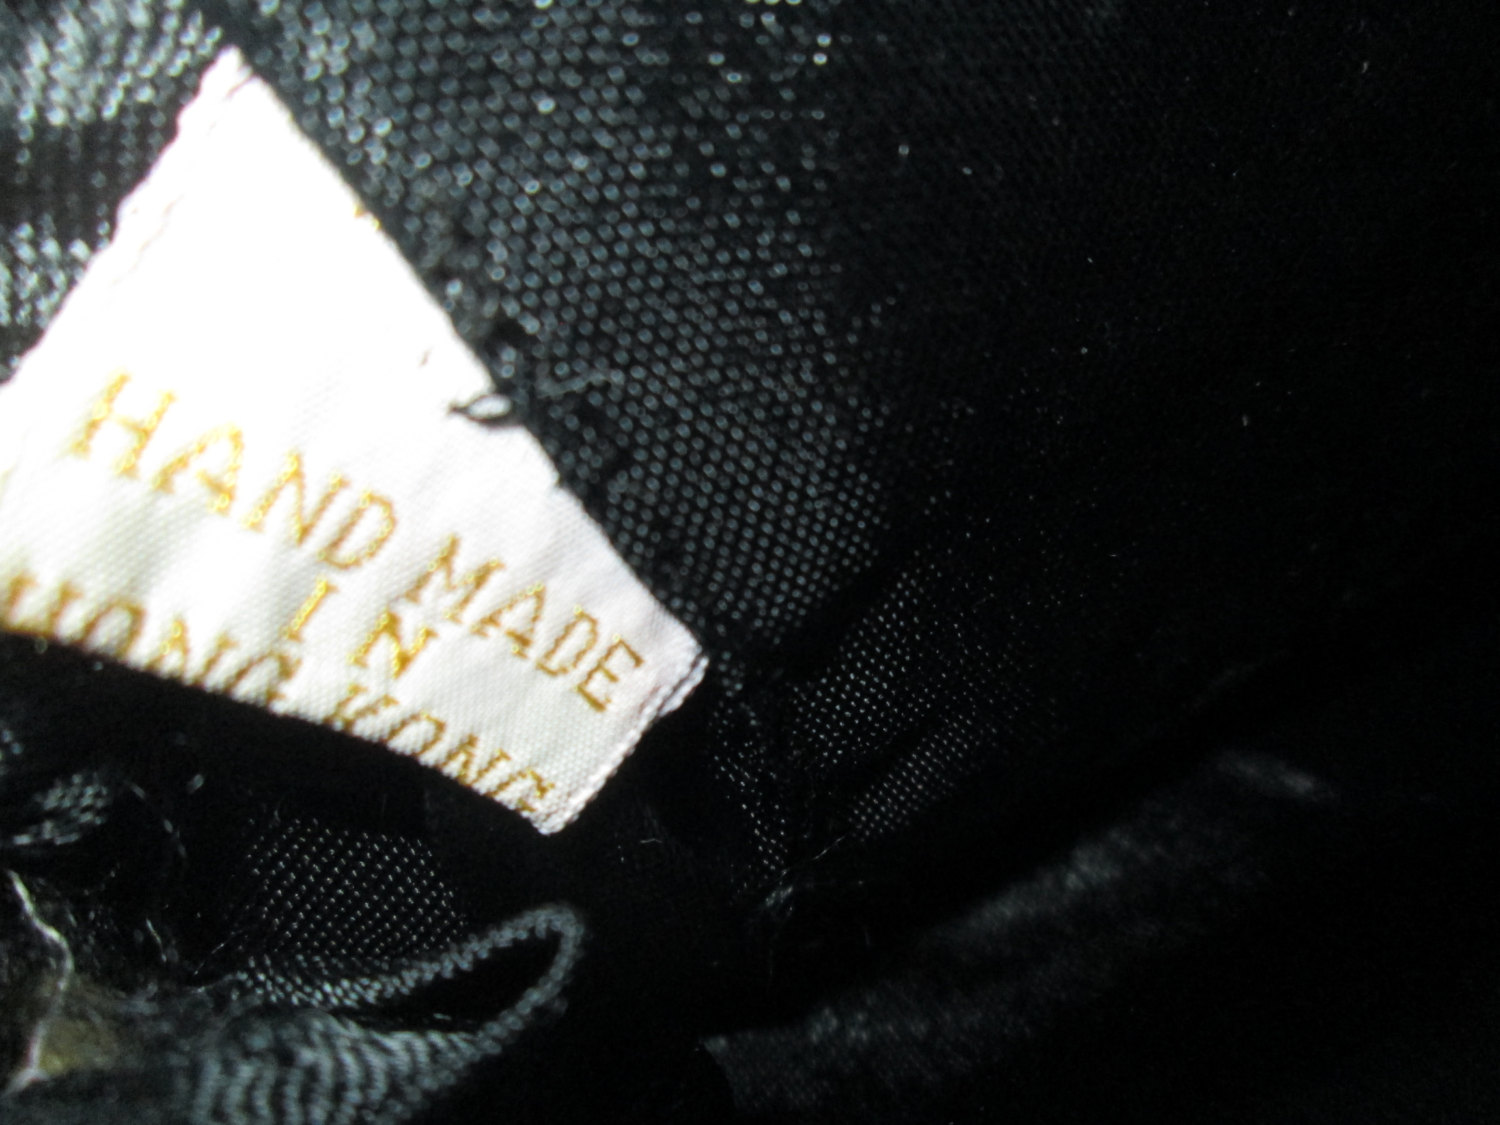 Vintage Black Beaded Evening Bag Made in Hong Kong – hurdyburdy vintage